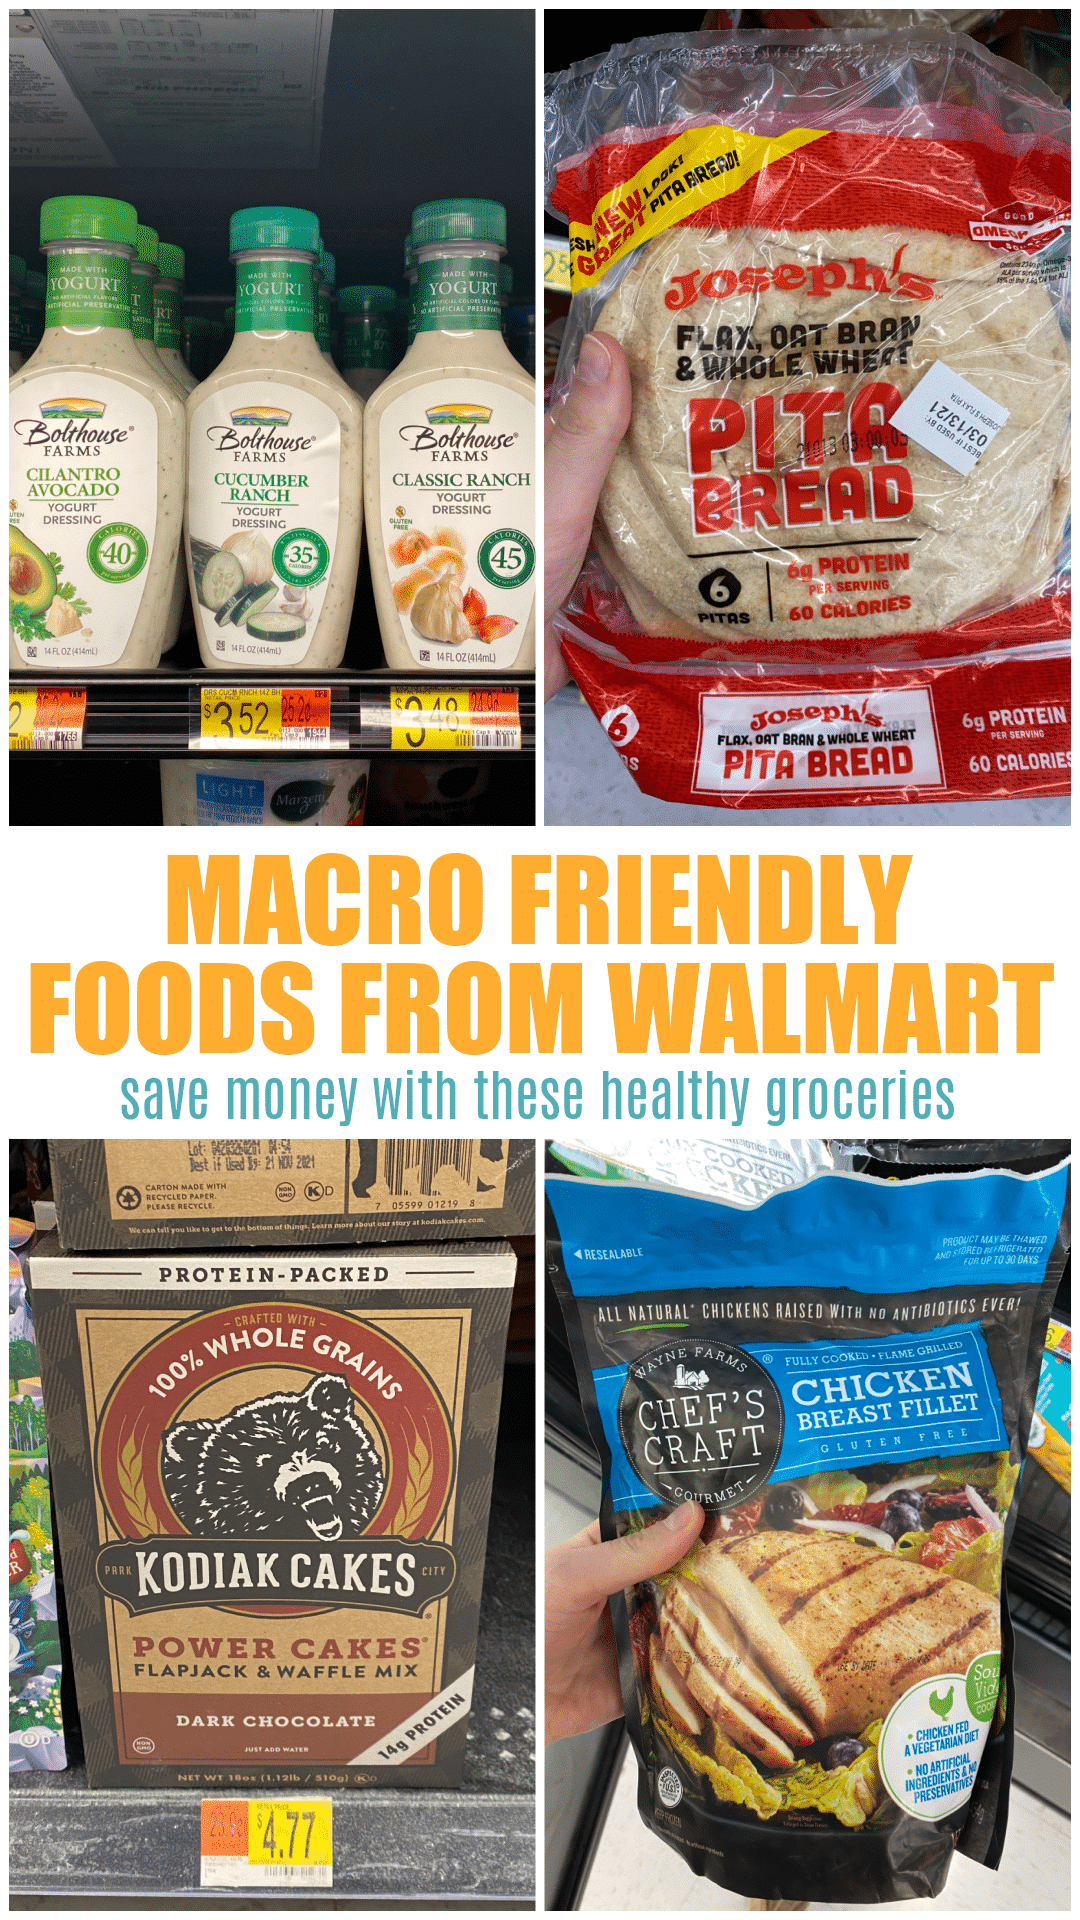 Macro Friendly Foods from Walmart: Best Groceries for Counting Macros